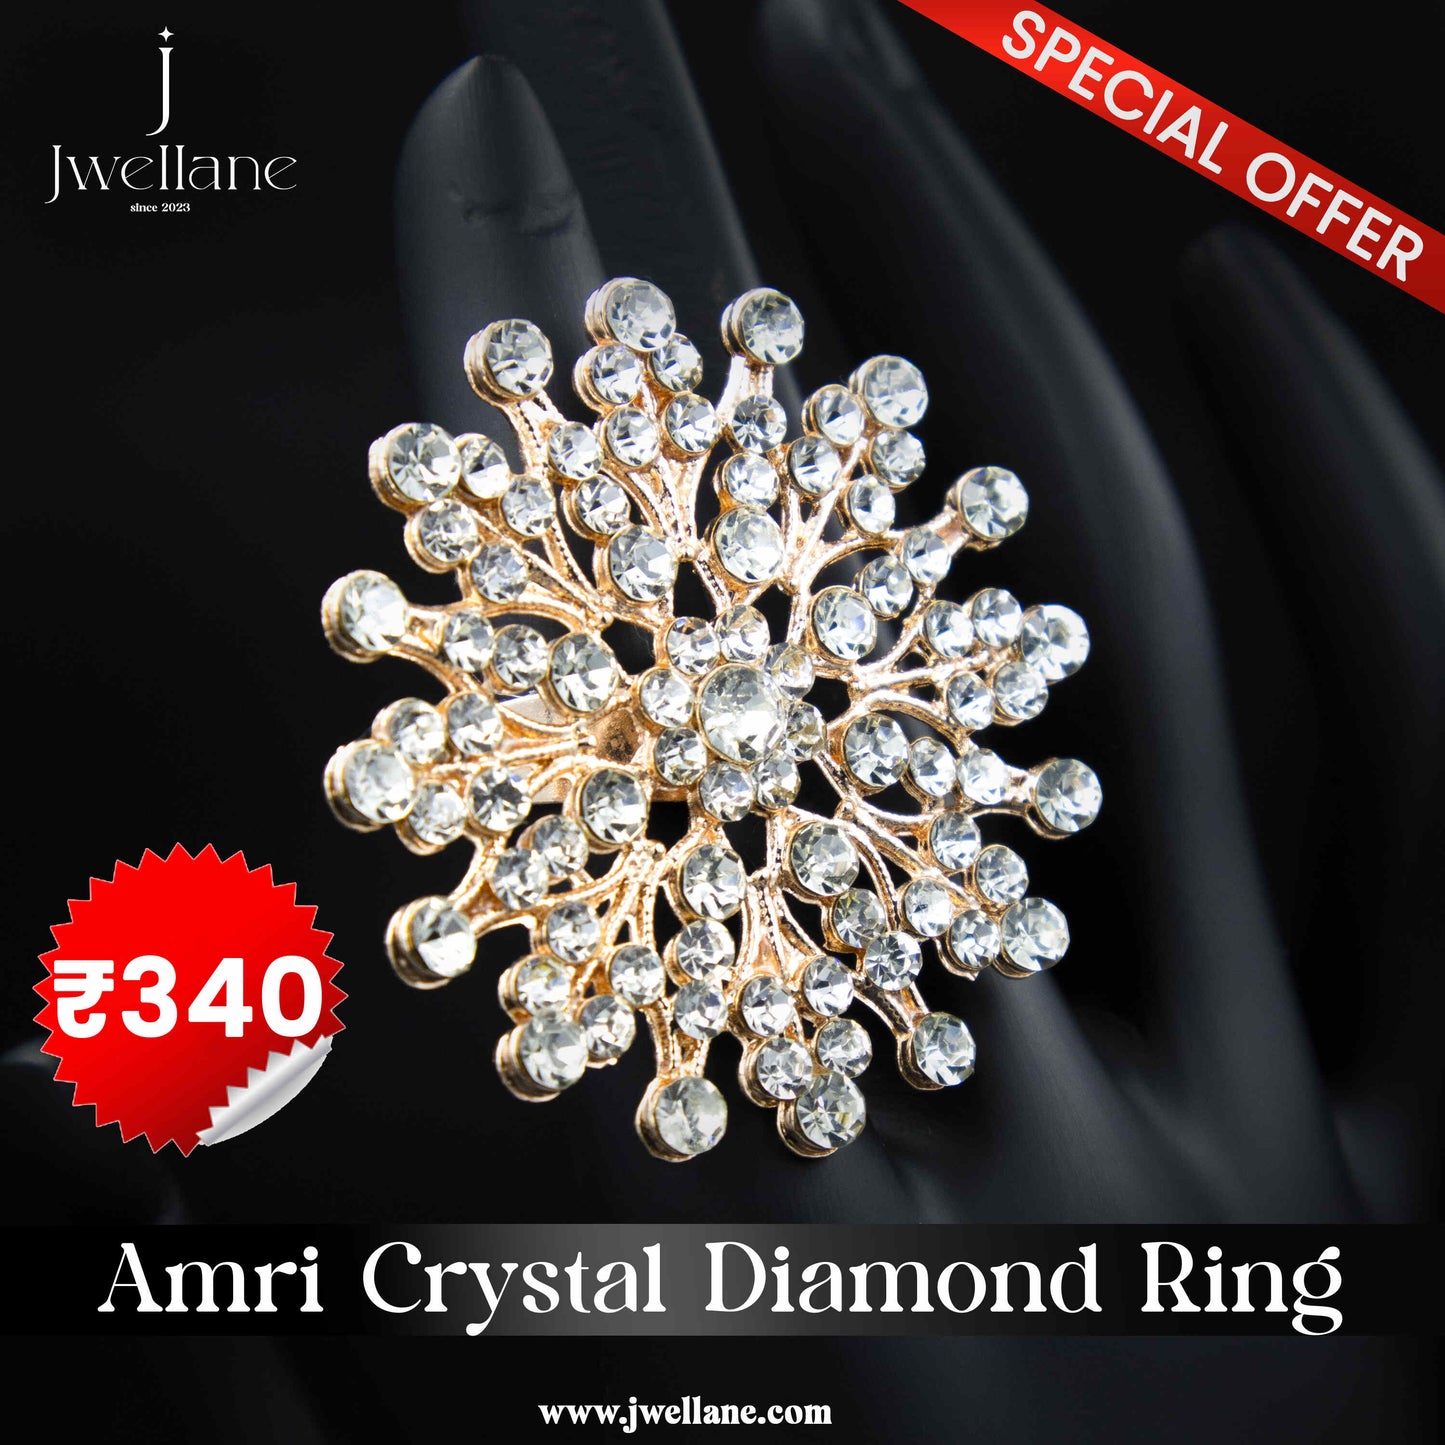 Amri Crystal Diamond Ring